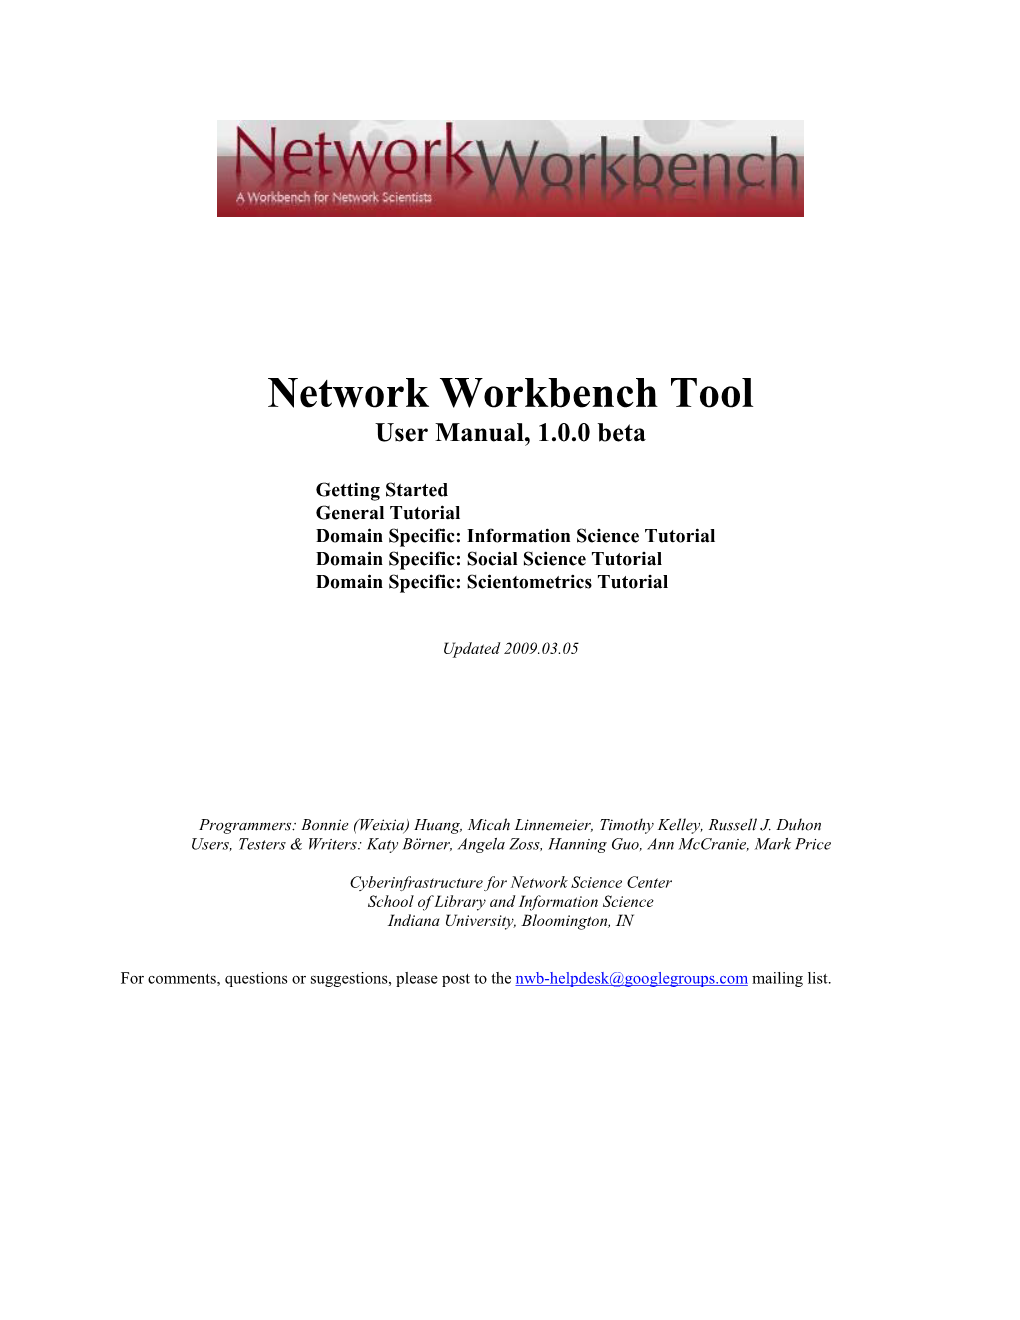 Network Workbench Tool User Manual, 1.0.0 Beta